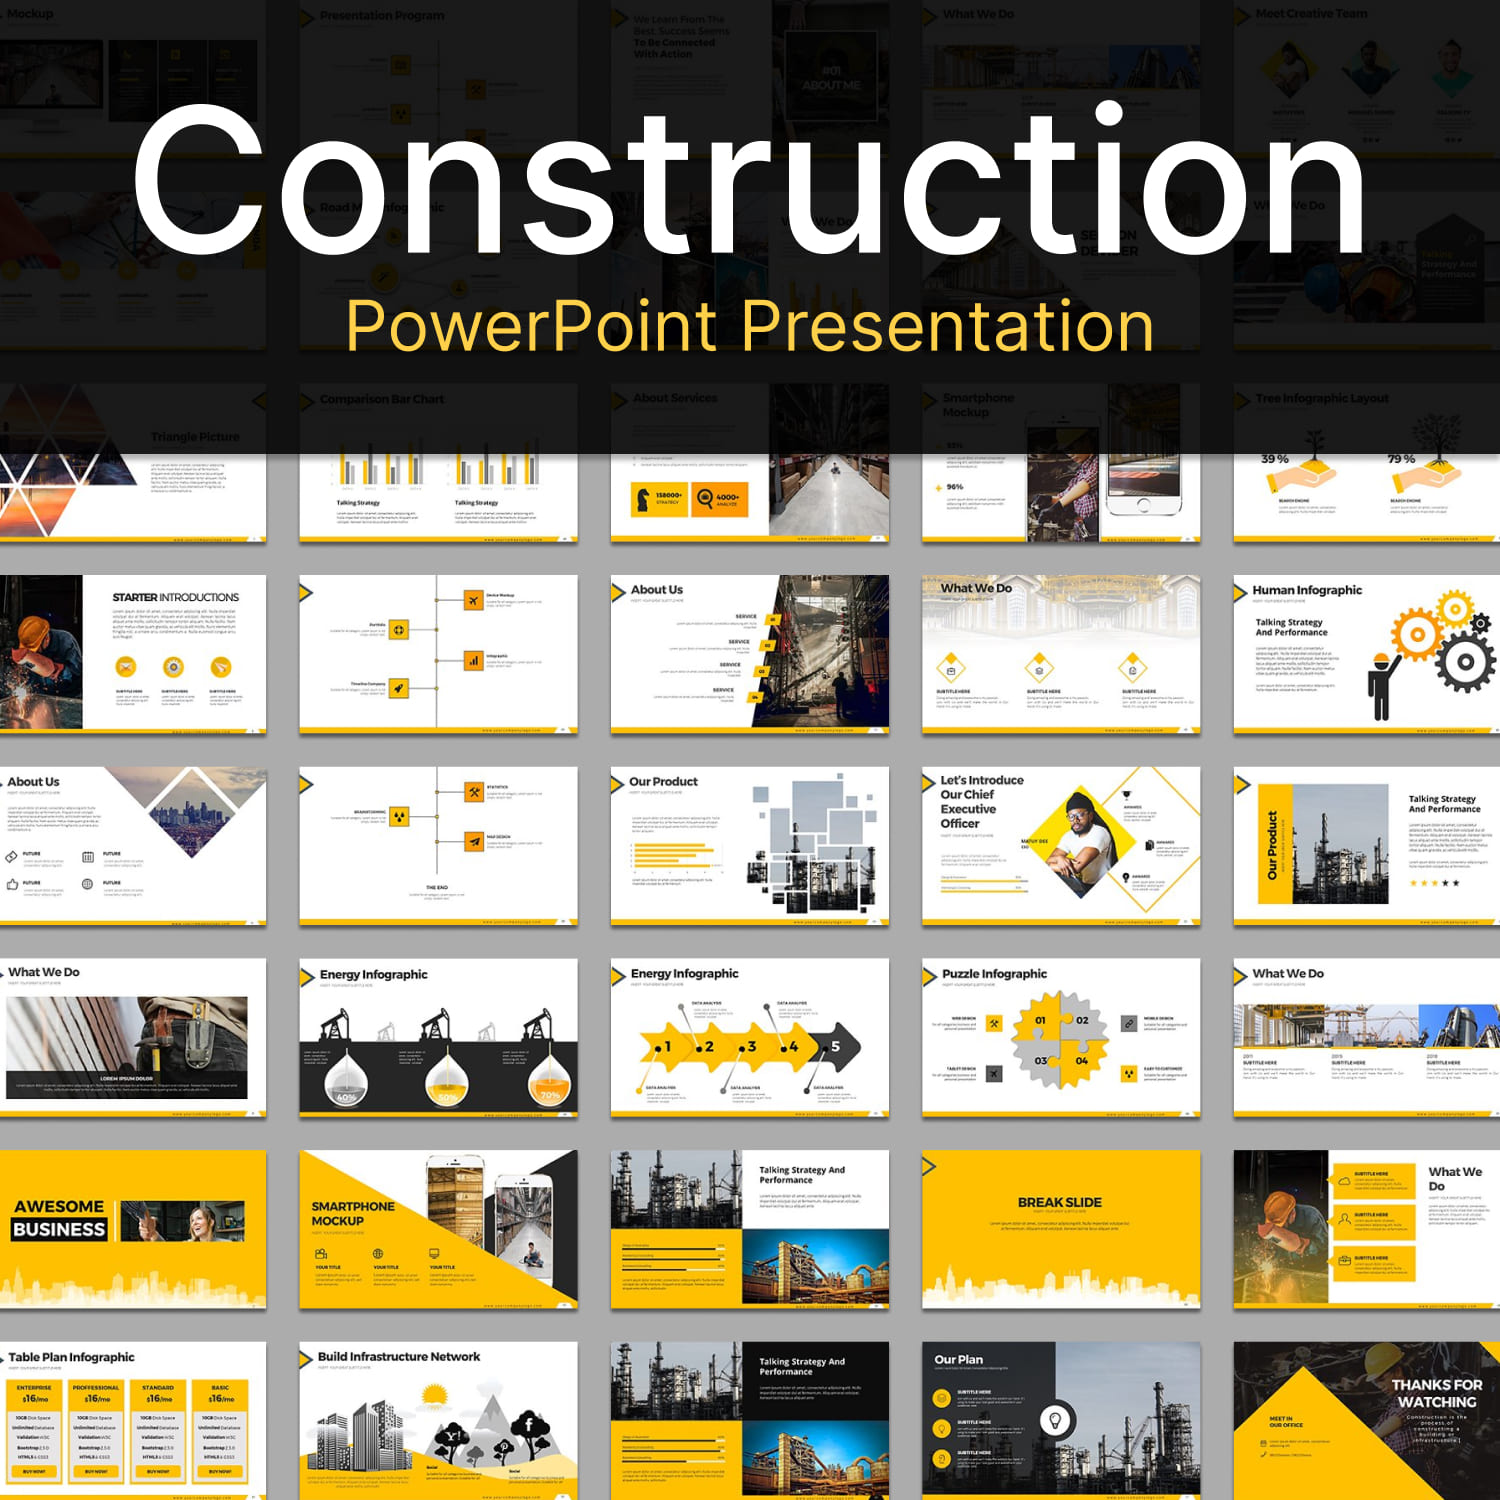 Construction PowerPoint Presentation.